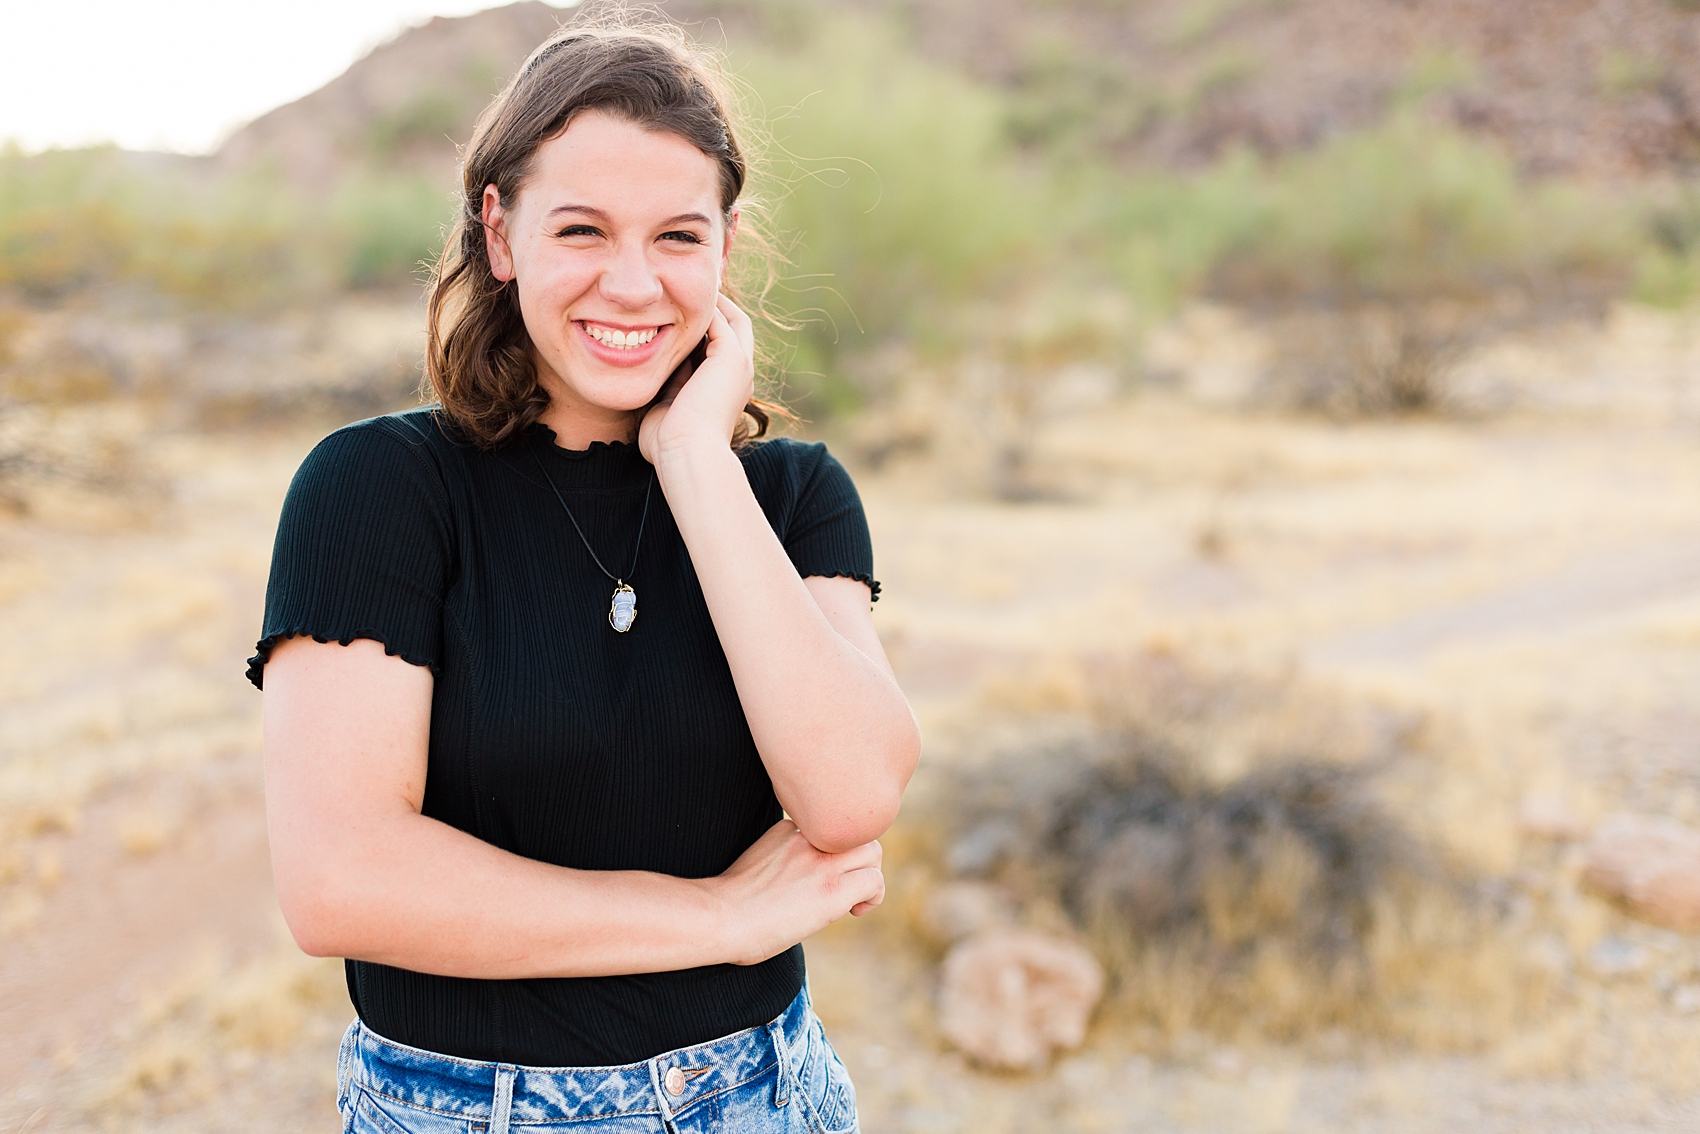 Leah Hope Photography | Phoenix Scottsdale Arizona | Desert Landscape Scenery | What to Wear | Senior Girl Poses | High School Senior | Graduation